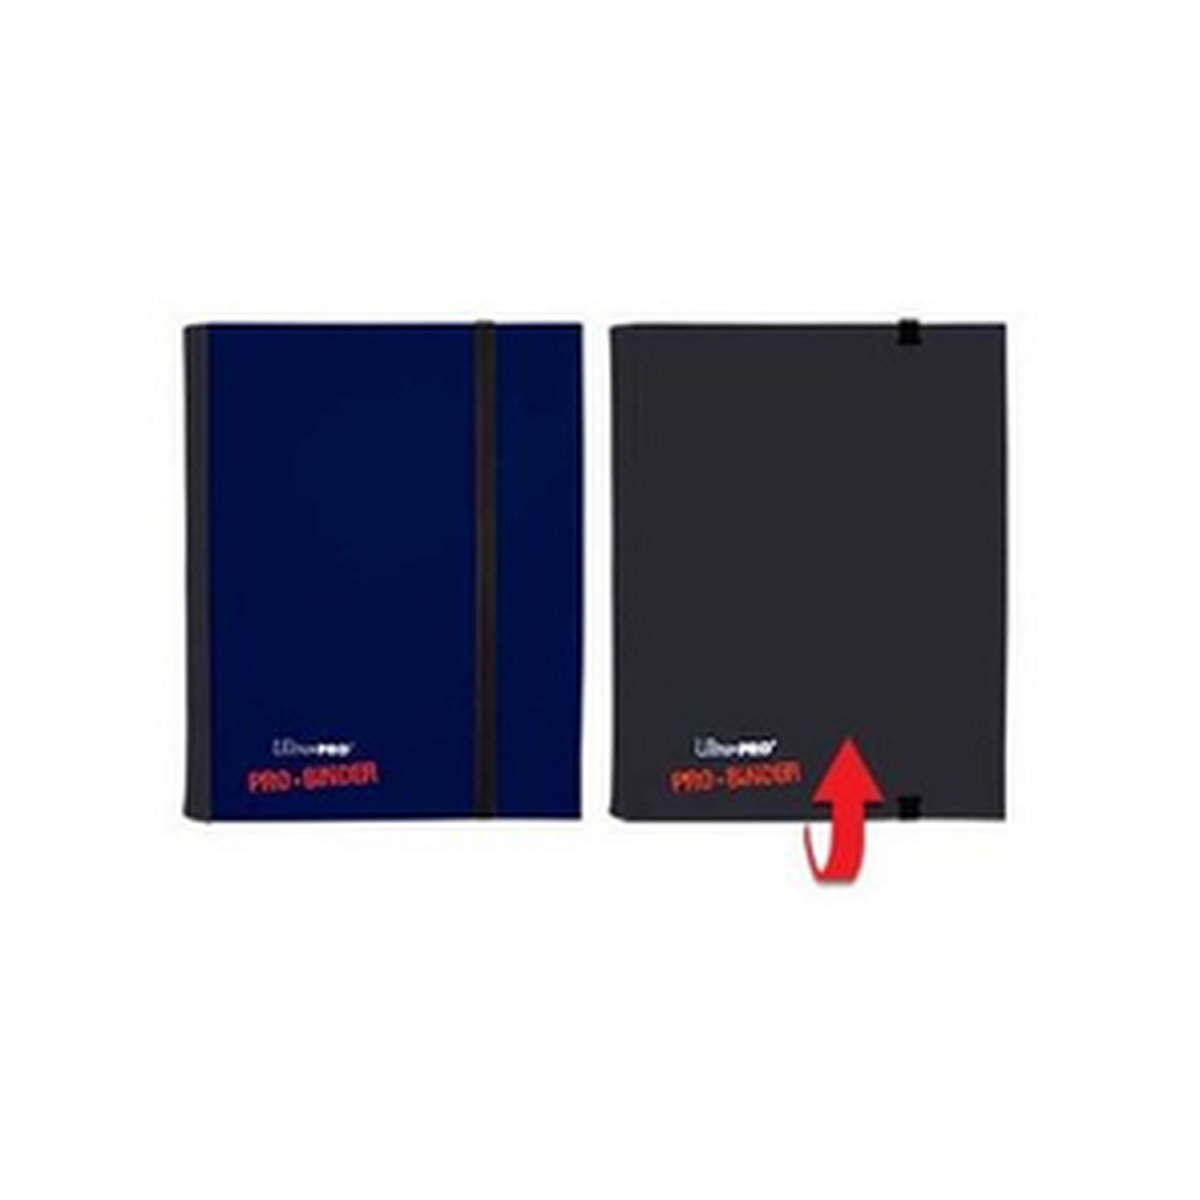 Pro Binder 4 Compartments / 160 Cards - Blue/Black